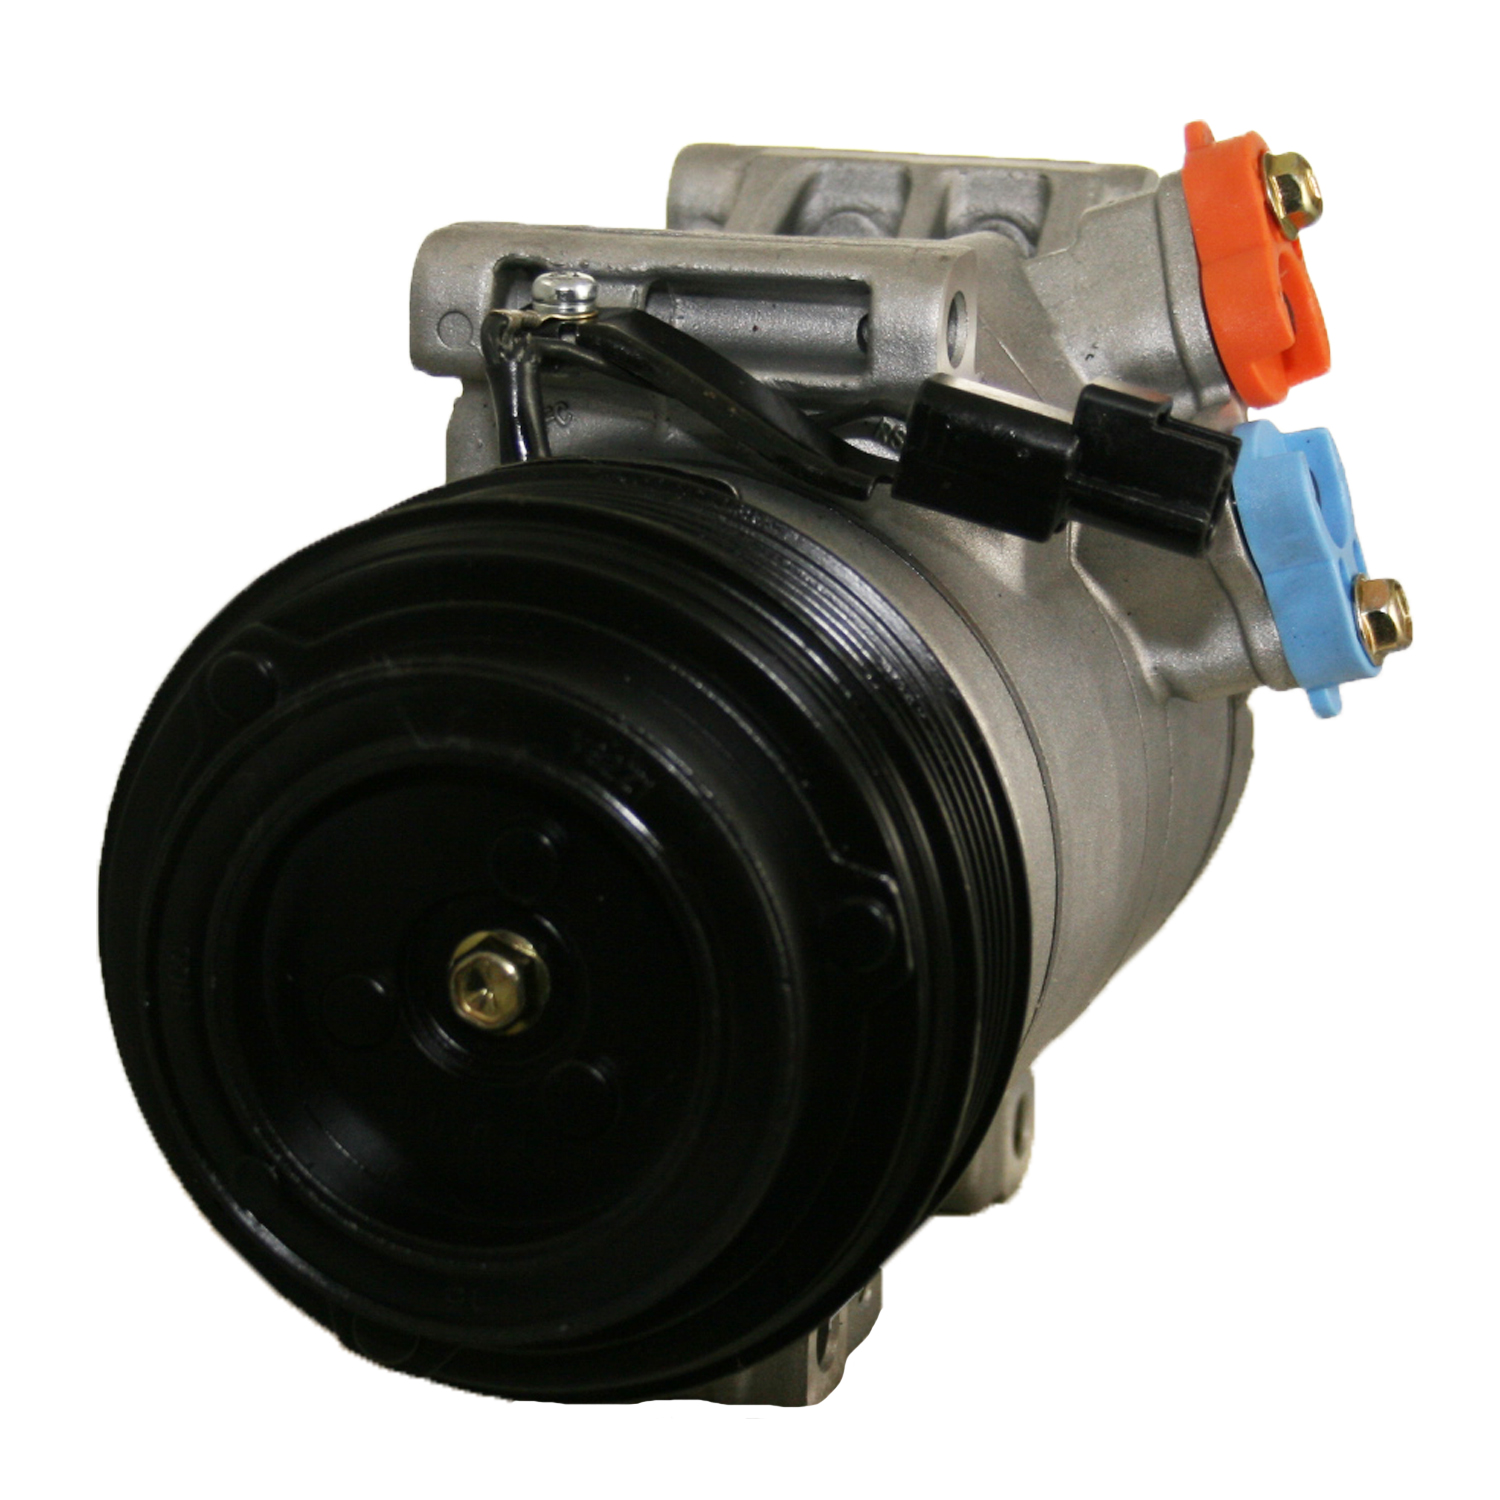 TCW Compressor 20365.6T1 Remanufactured Product Image field_60b6a13a6e67c